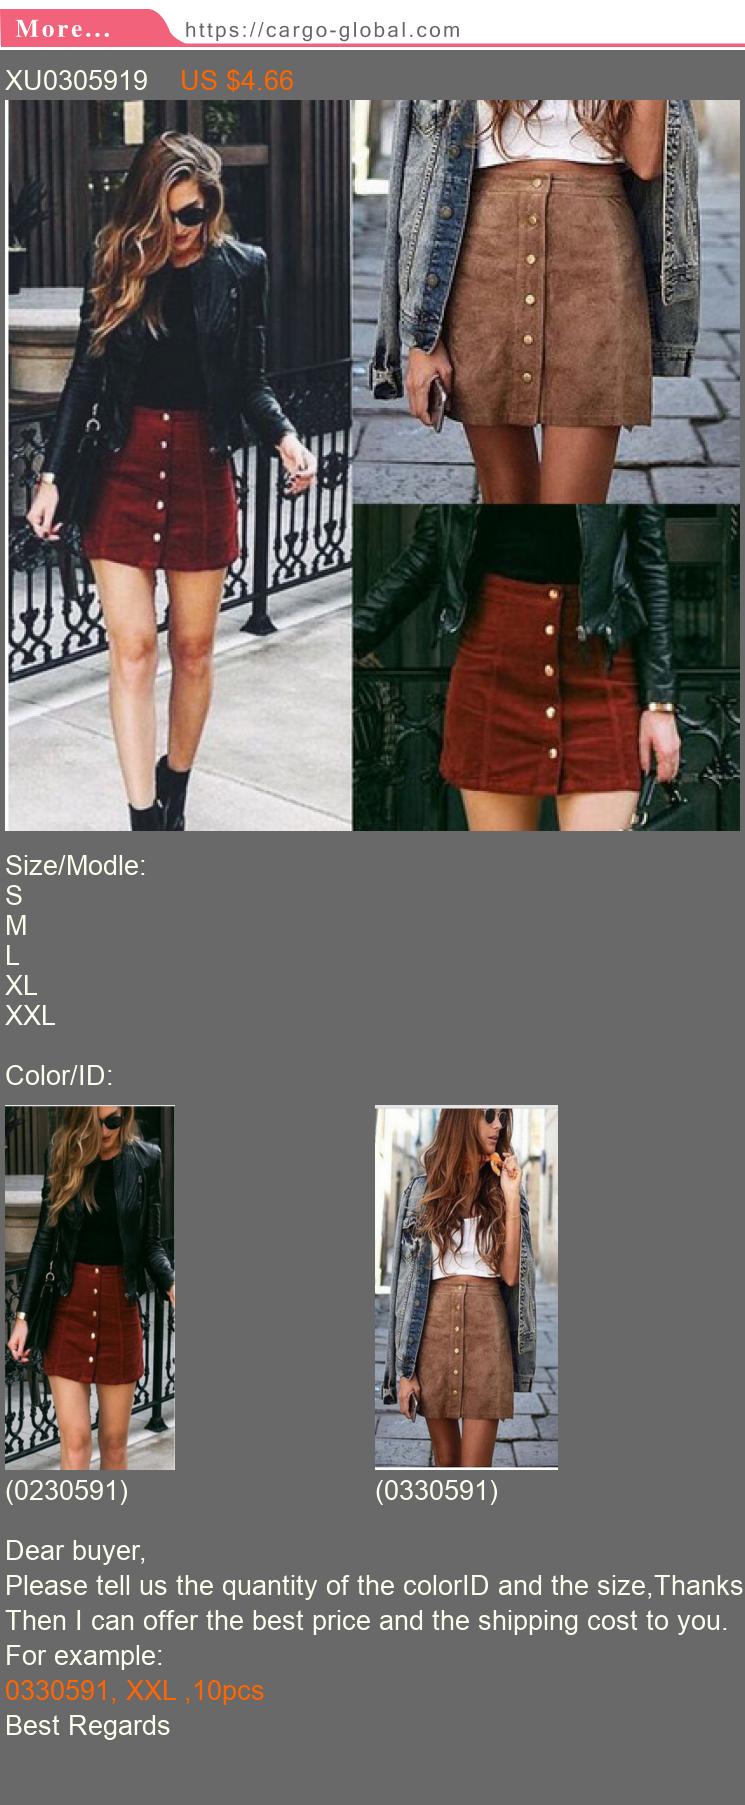 Colorfaith 2019 Women Slit Long Maxi Skirt Vintage Ladies Fashion Pleated Flared Pockets Lace Up Bow Plus Size 4XL Skirt